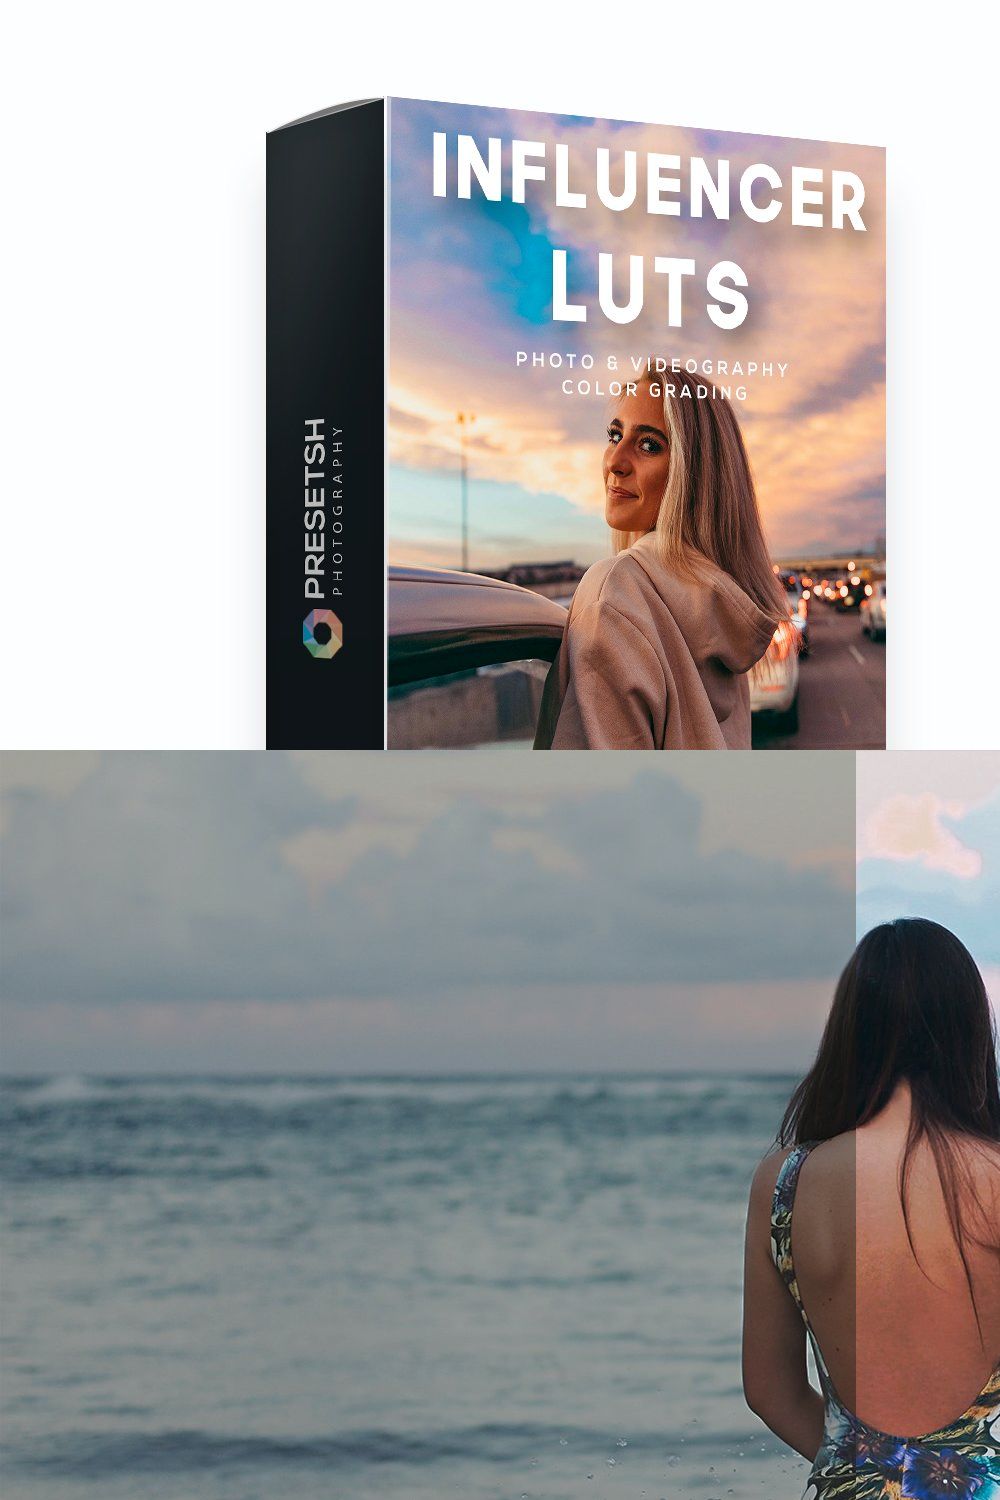 Influencer LUTs for Color Grad pinterest preview image.